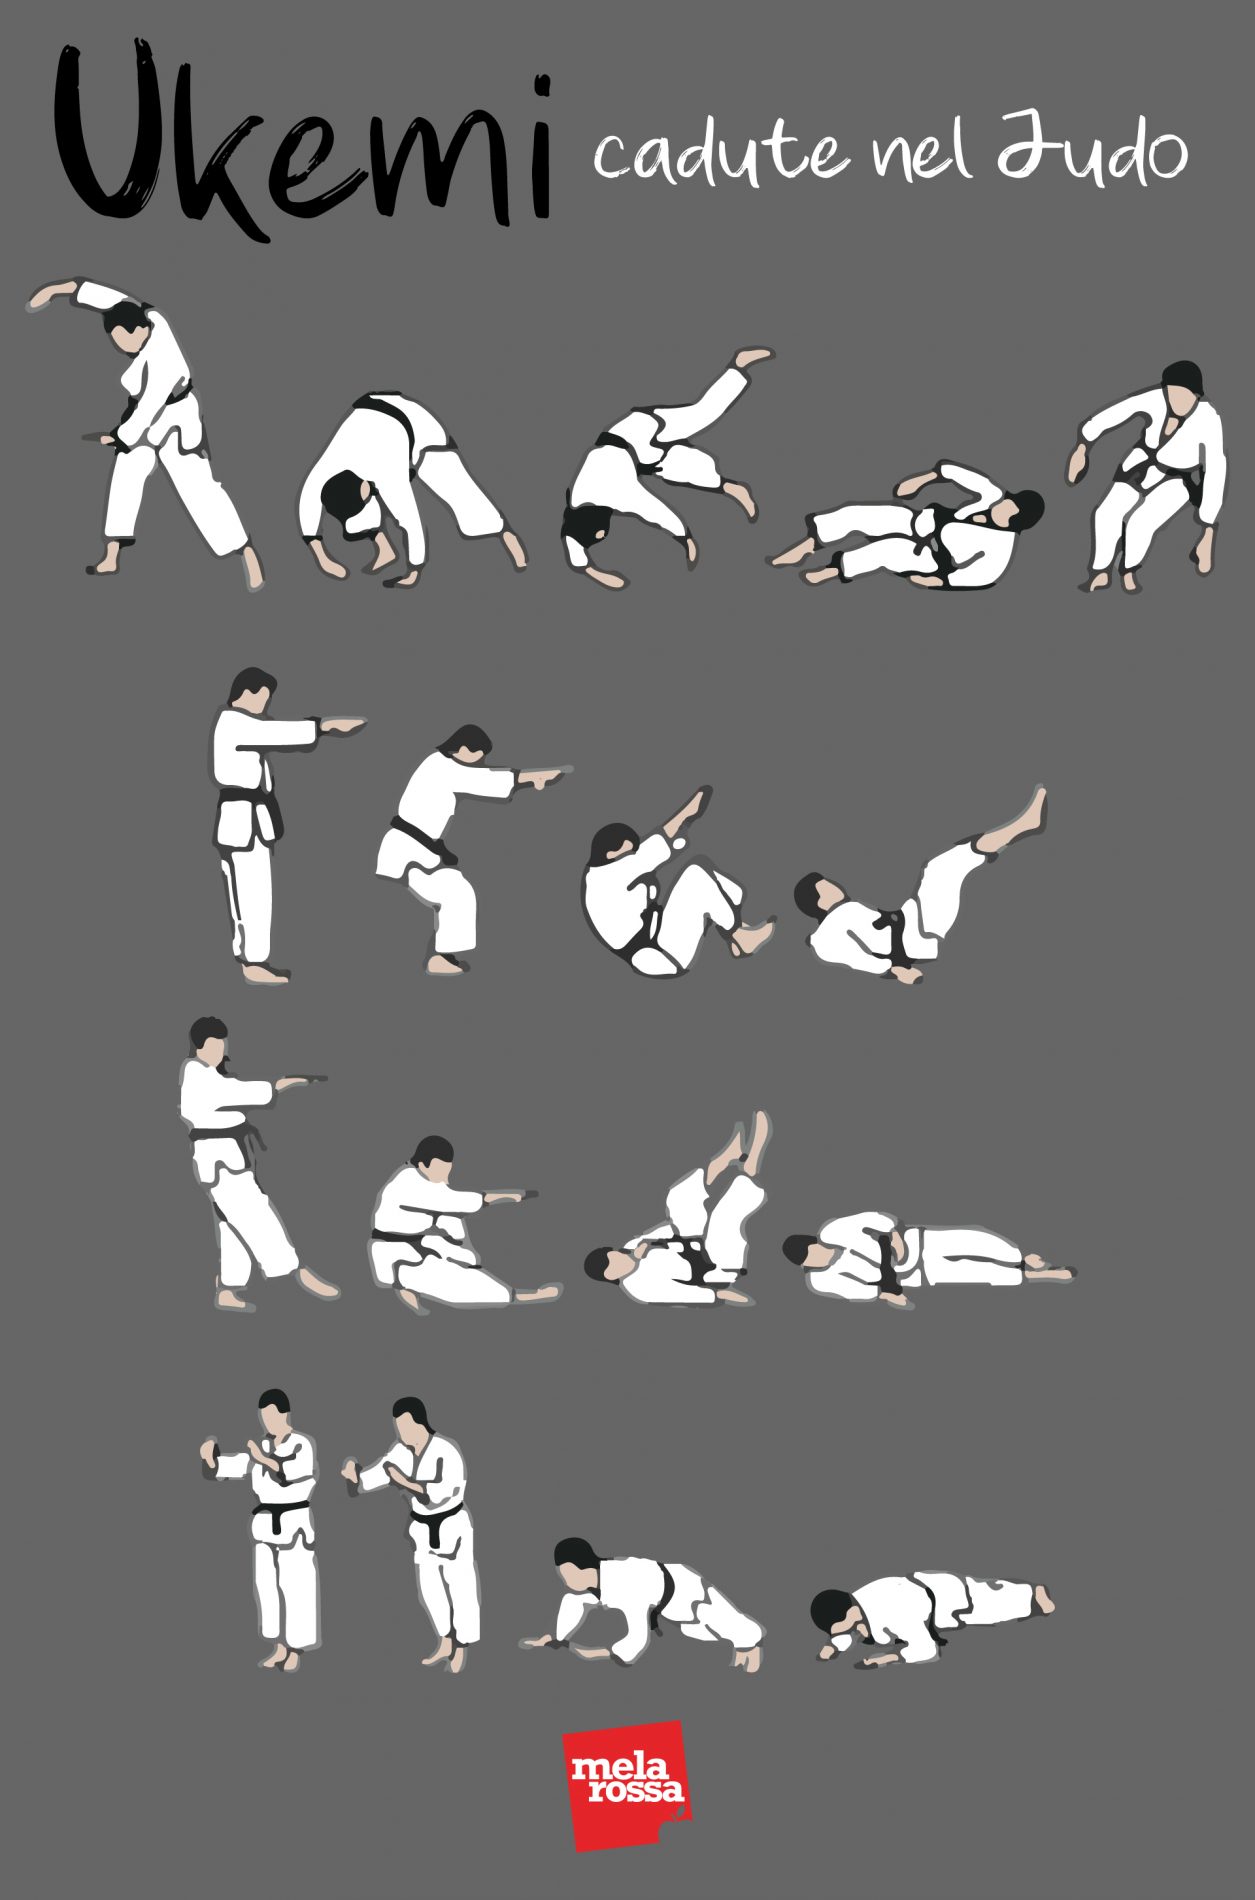 Ukemi: cadute nel judo